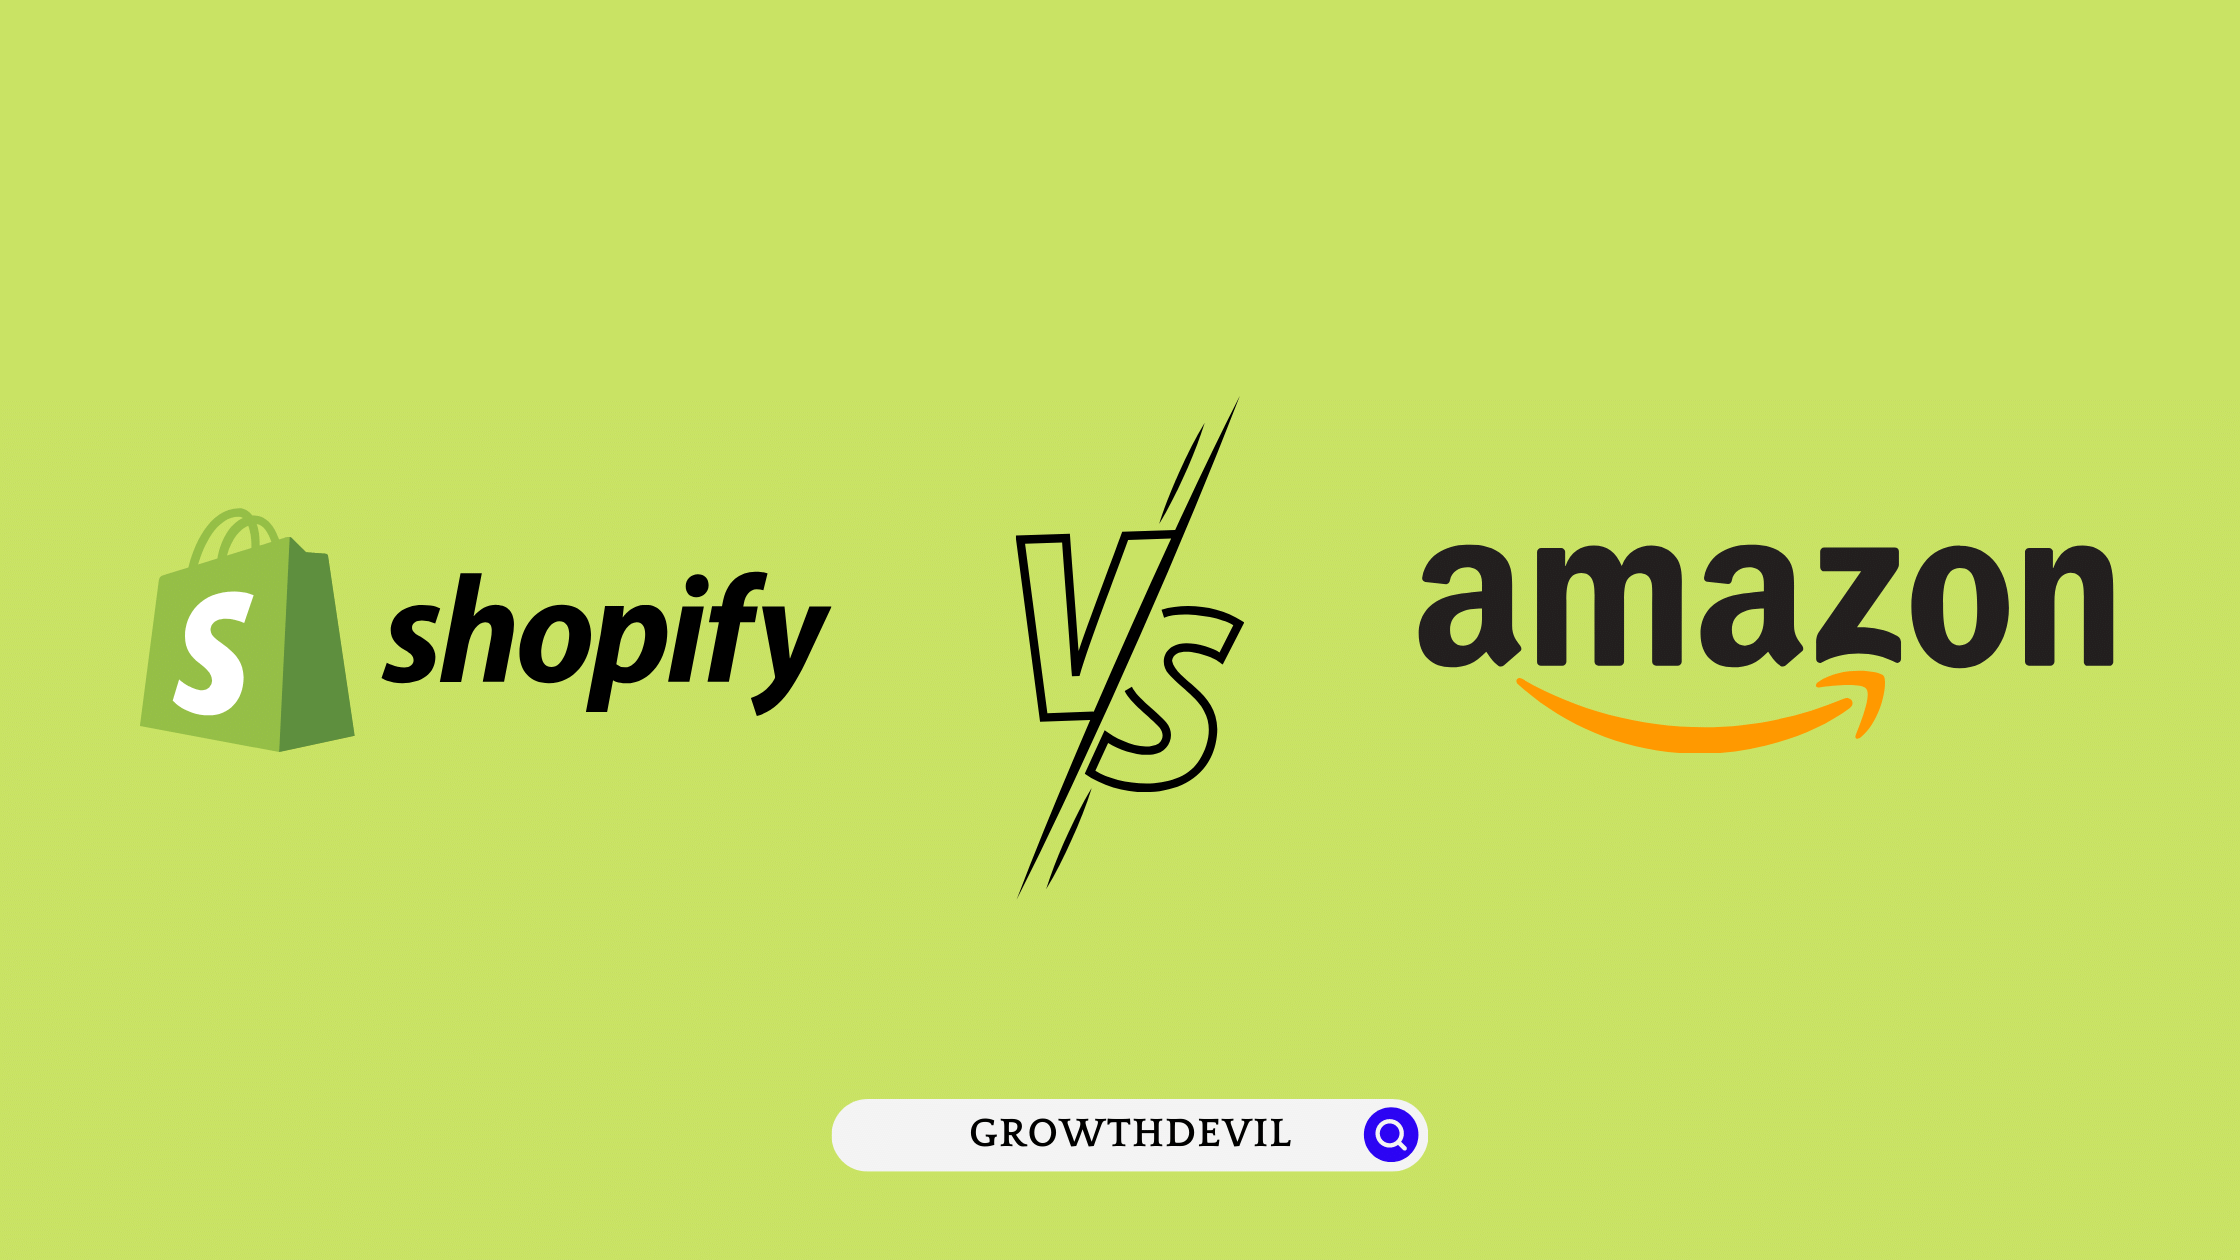 Shopify vs Amazon - GrowthDevil